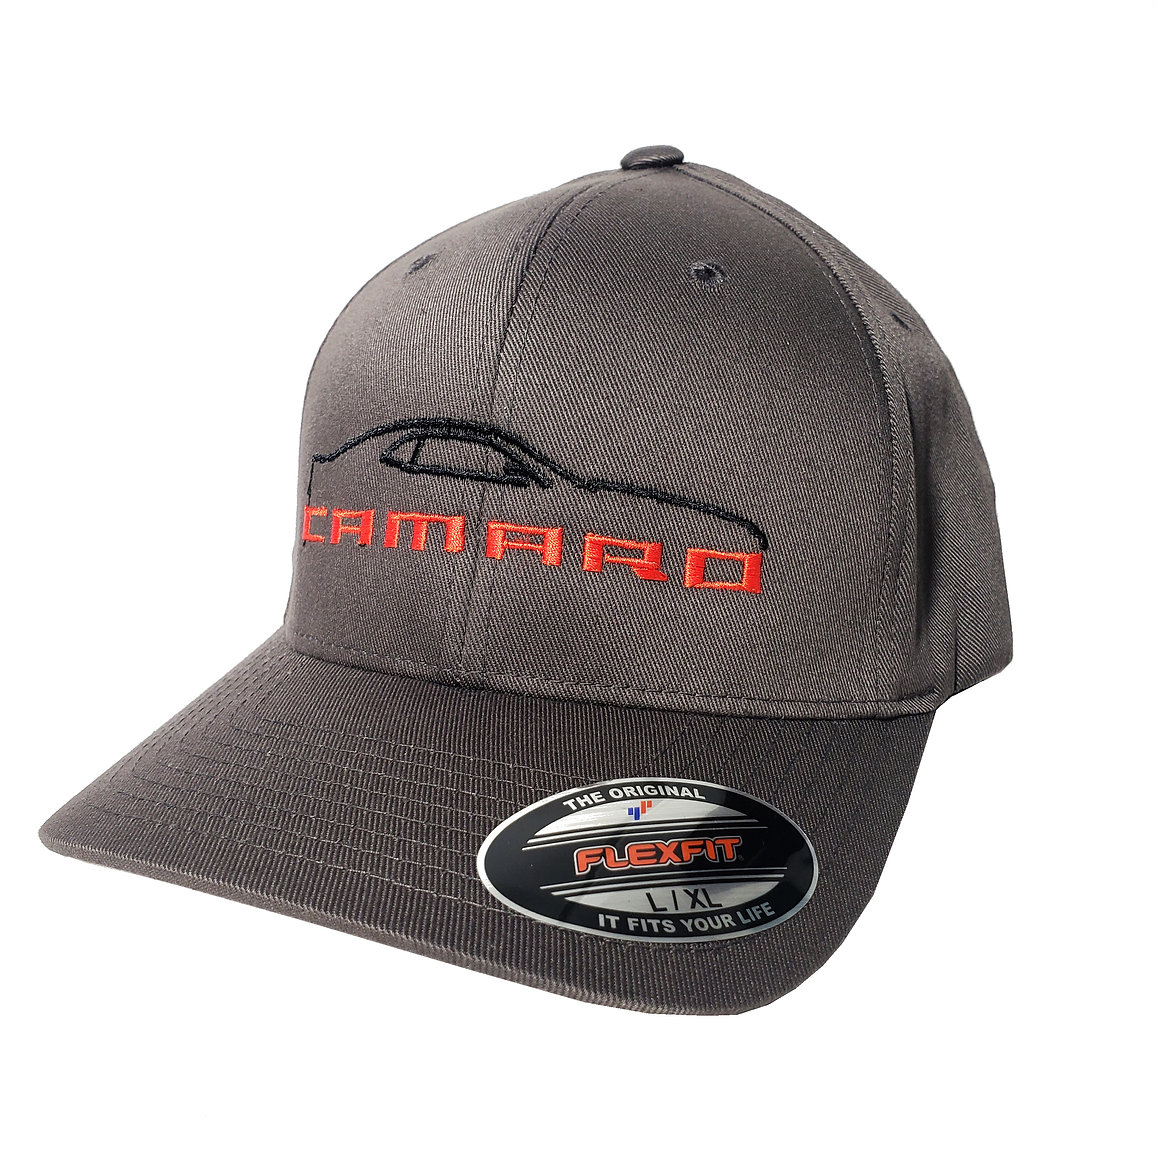 5th : Sale Fit |West On Coast Silhouette Camaro Black Flex Gen Hat Camaro